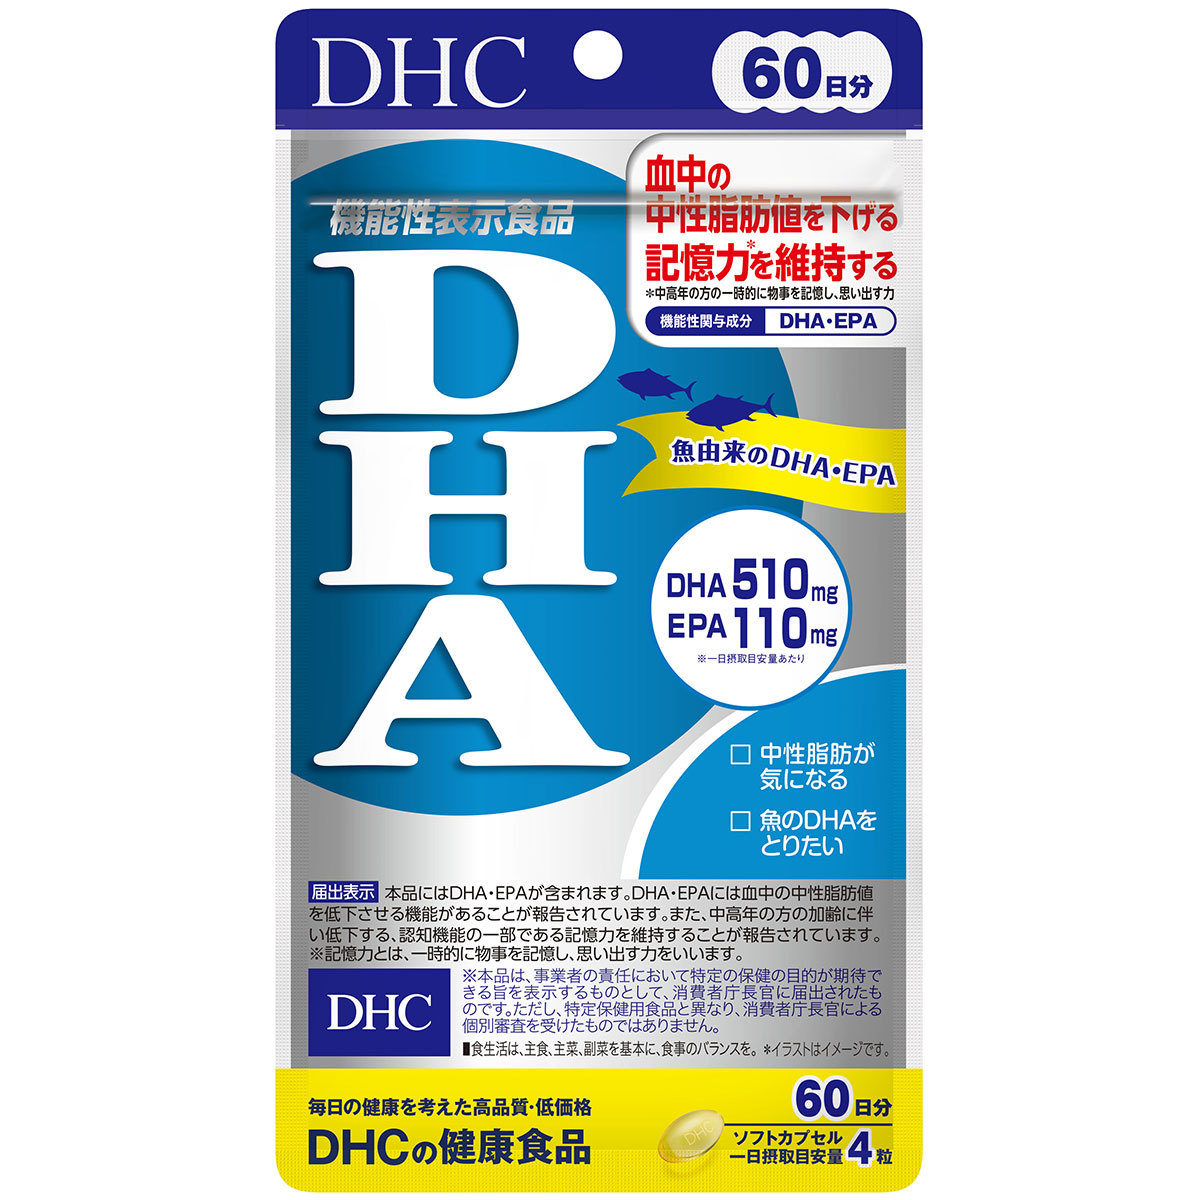 DHC DHA 60日分 240粒 × 1個の商品画像